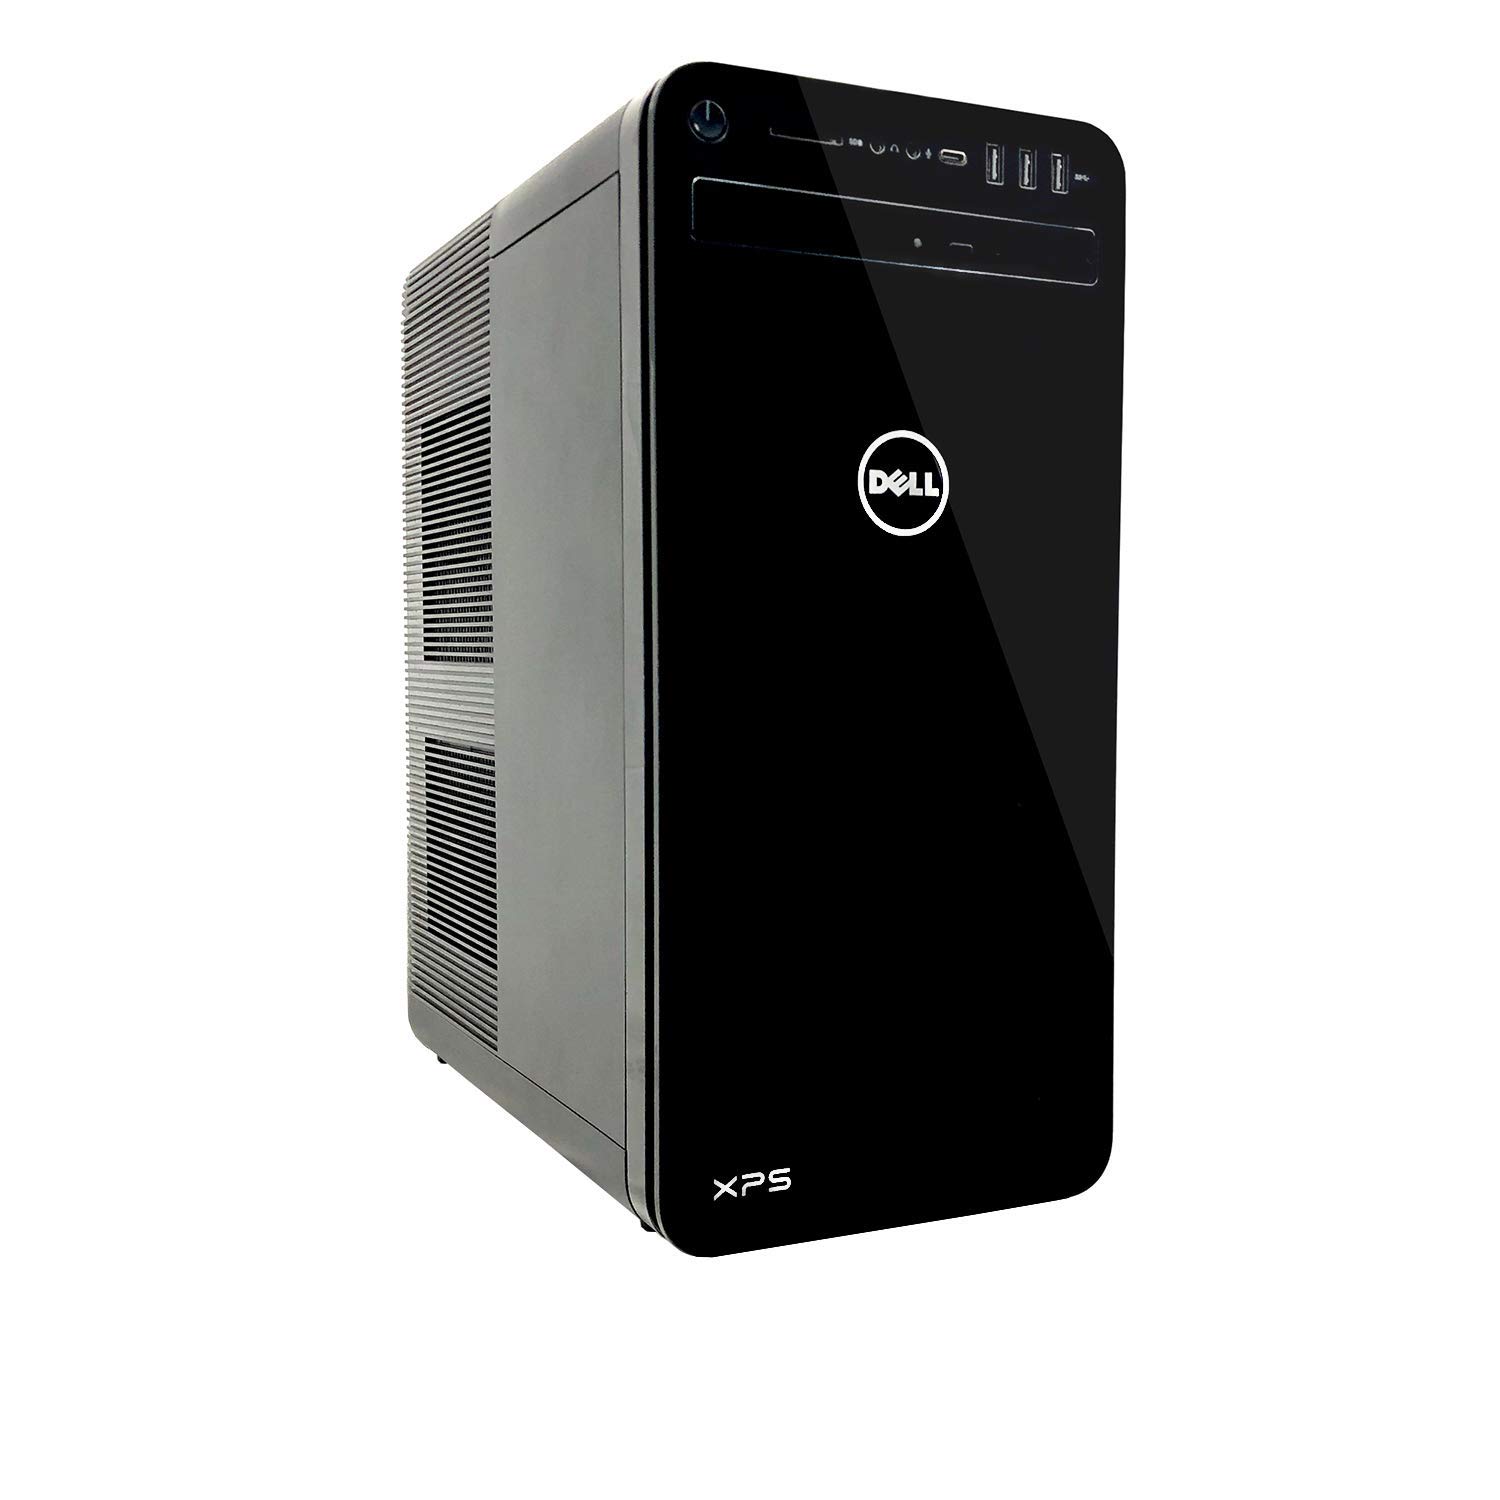 Dell XPS 8930 Tower Desktop - 8th Gen. Intel Core i7-8700 6-Core up to 4.60 GHz, 16GB DDR4 Memory, 256GB SSD + 2TB SATA Hard Drive, 8GB Nvidia GeForce GTX 1070, Windows 10, Black (Renewed)